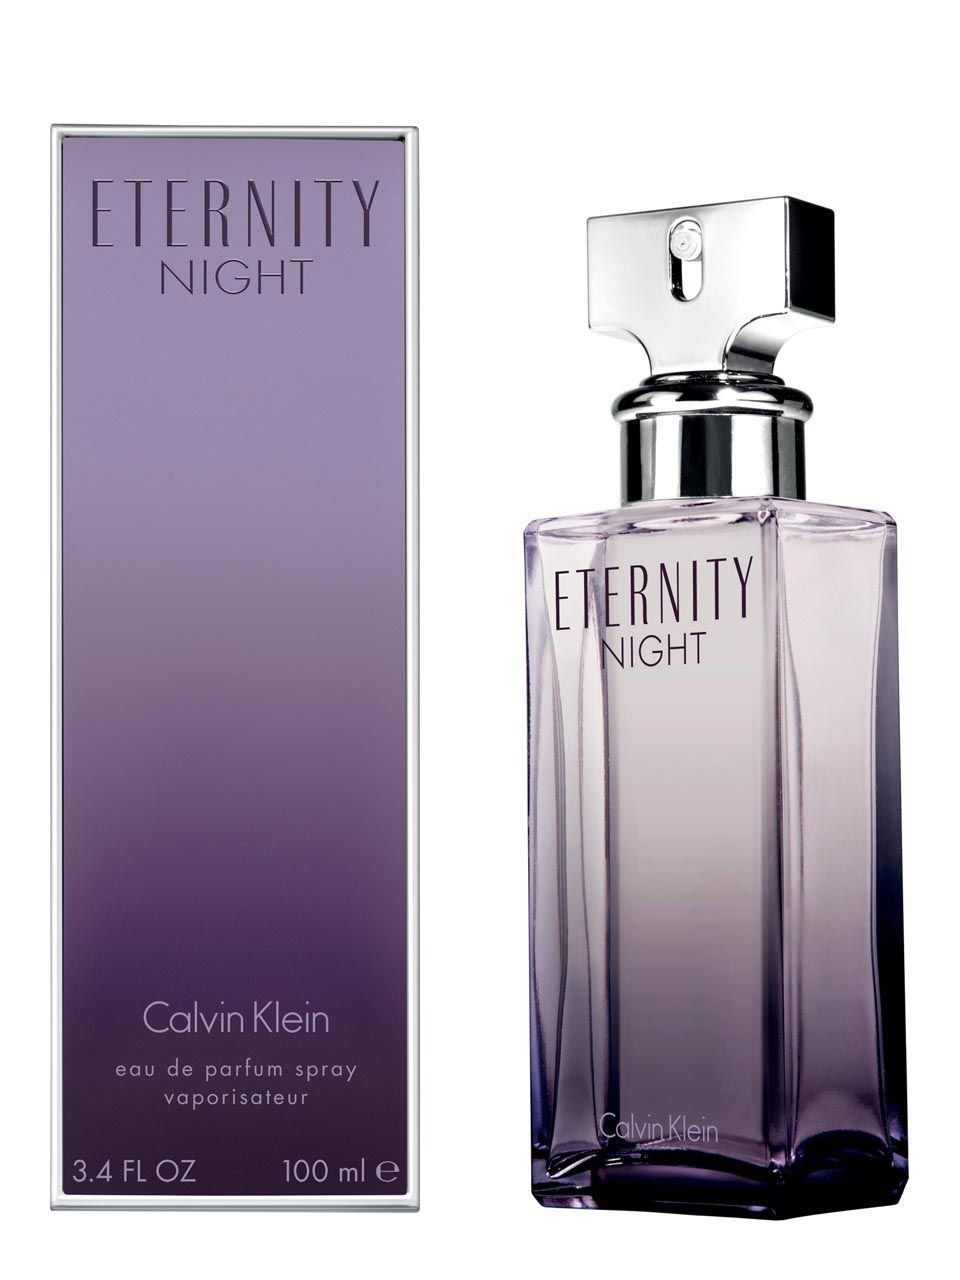 Изображение парфюма Calvin Klein Eternity Nigh